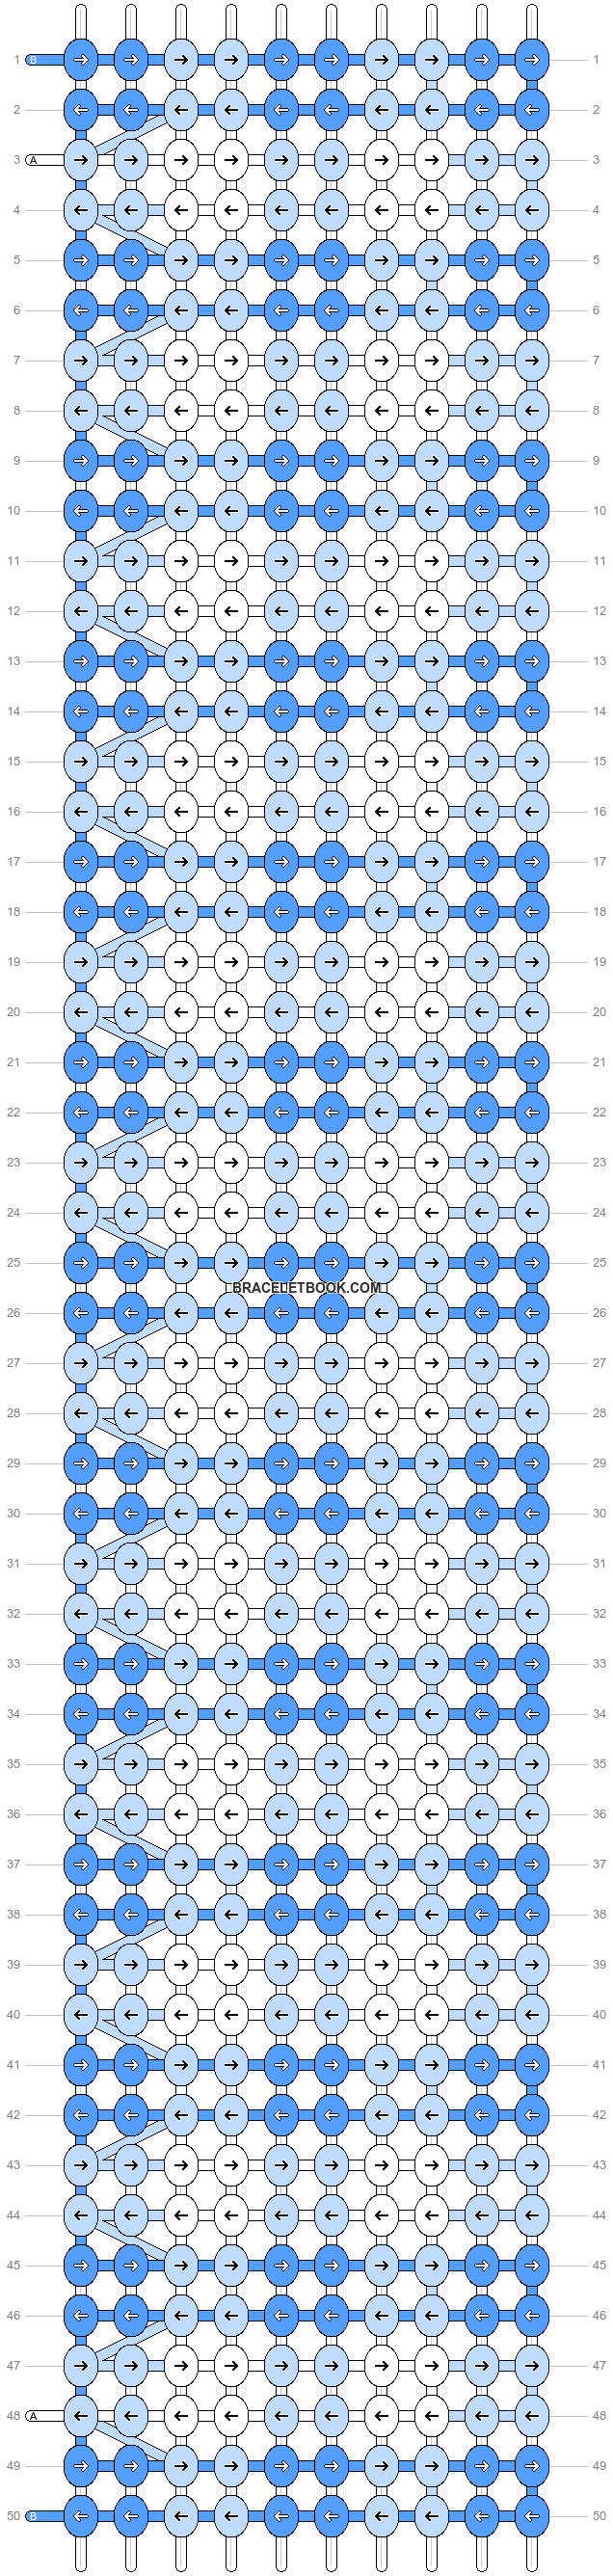 Alpha pattern #15051 variation #53644 pattern